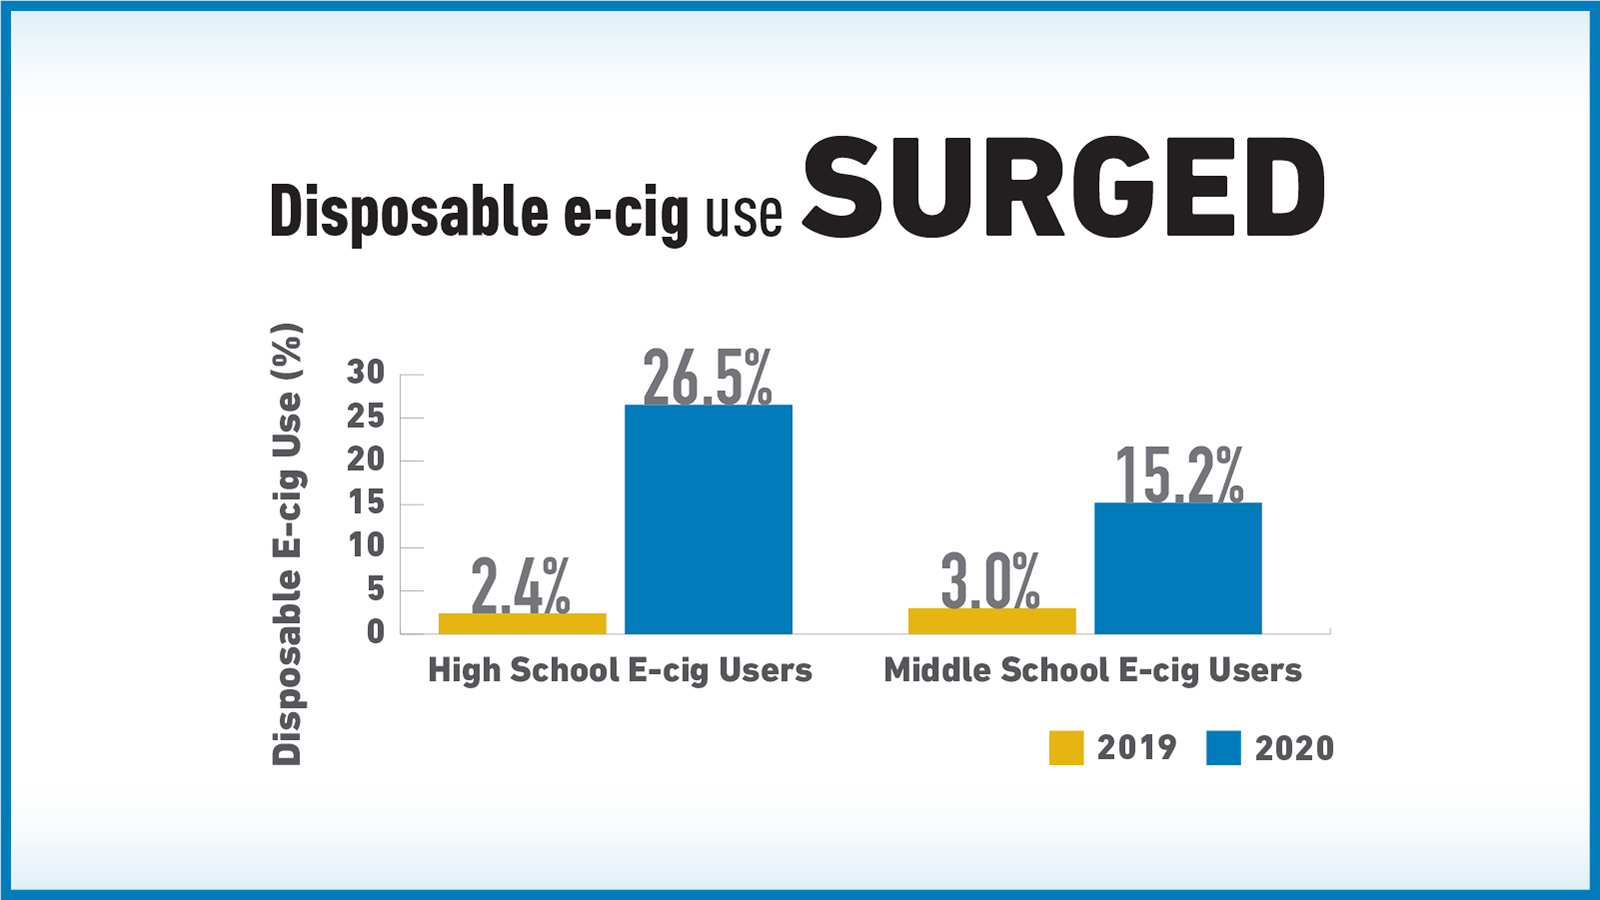 disposable e-cig use surged